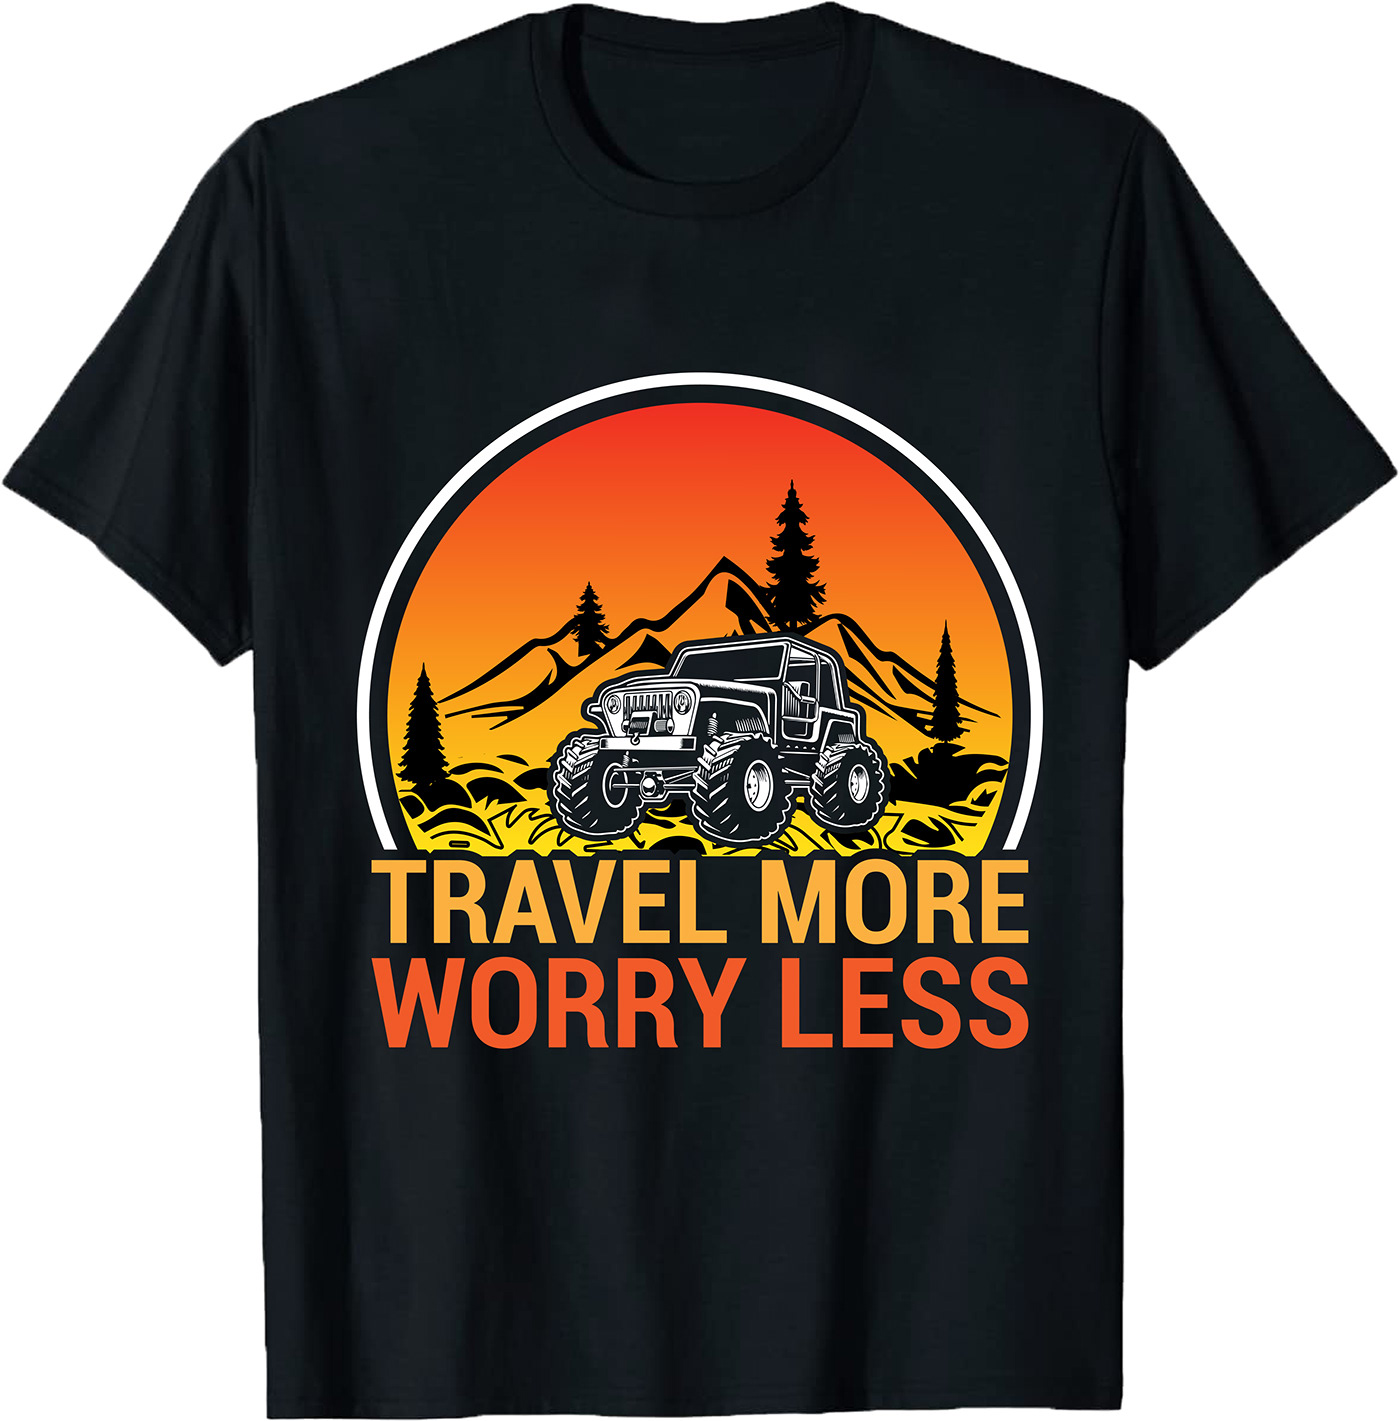 Travel vintage t-shirt Trendy t-shirt bulk t shirt Family Vacation t-shirt Family T-shirt Vacation T-Shirt Traveling T-shirt traveling t-shirt design